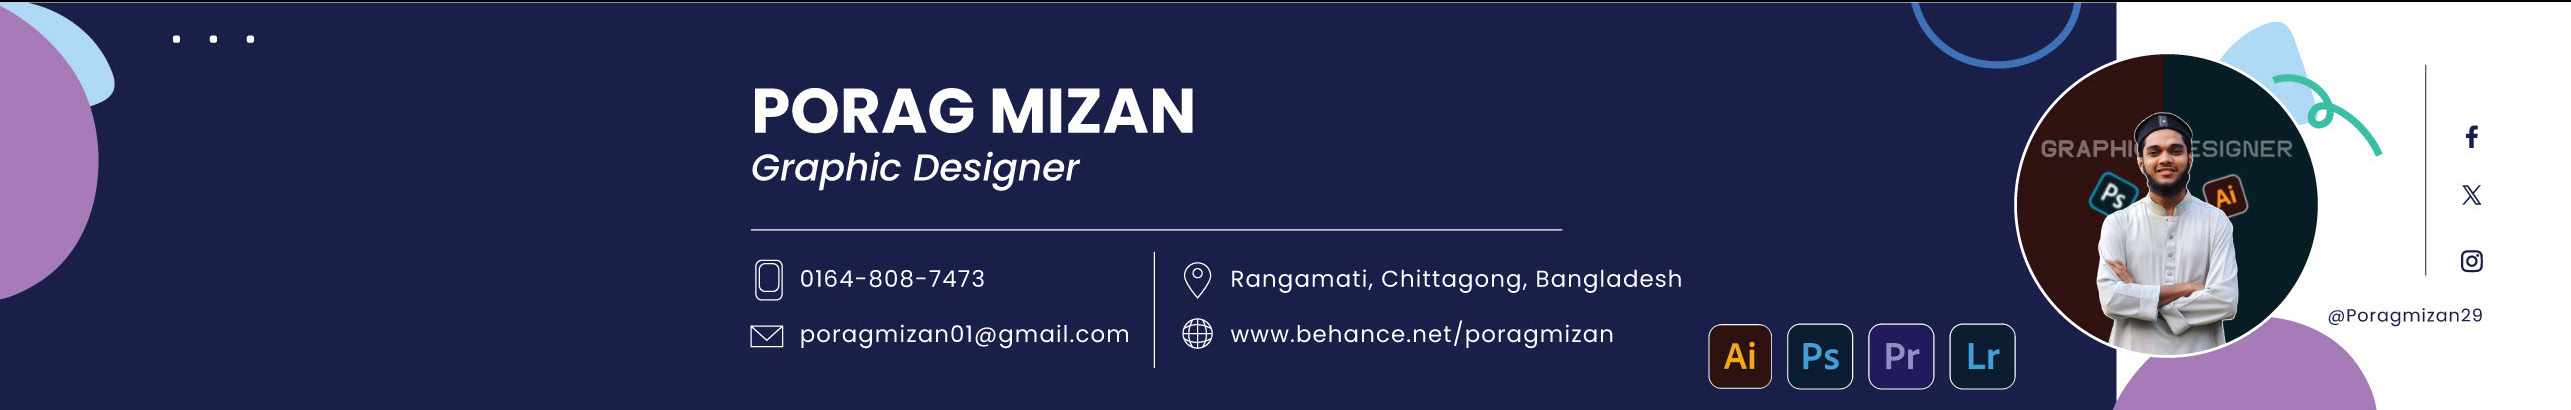 Porag Mizan's profile banner